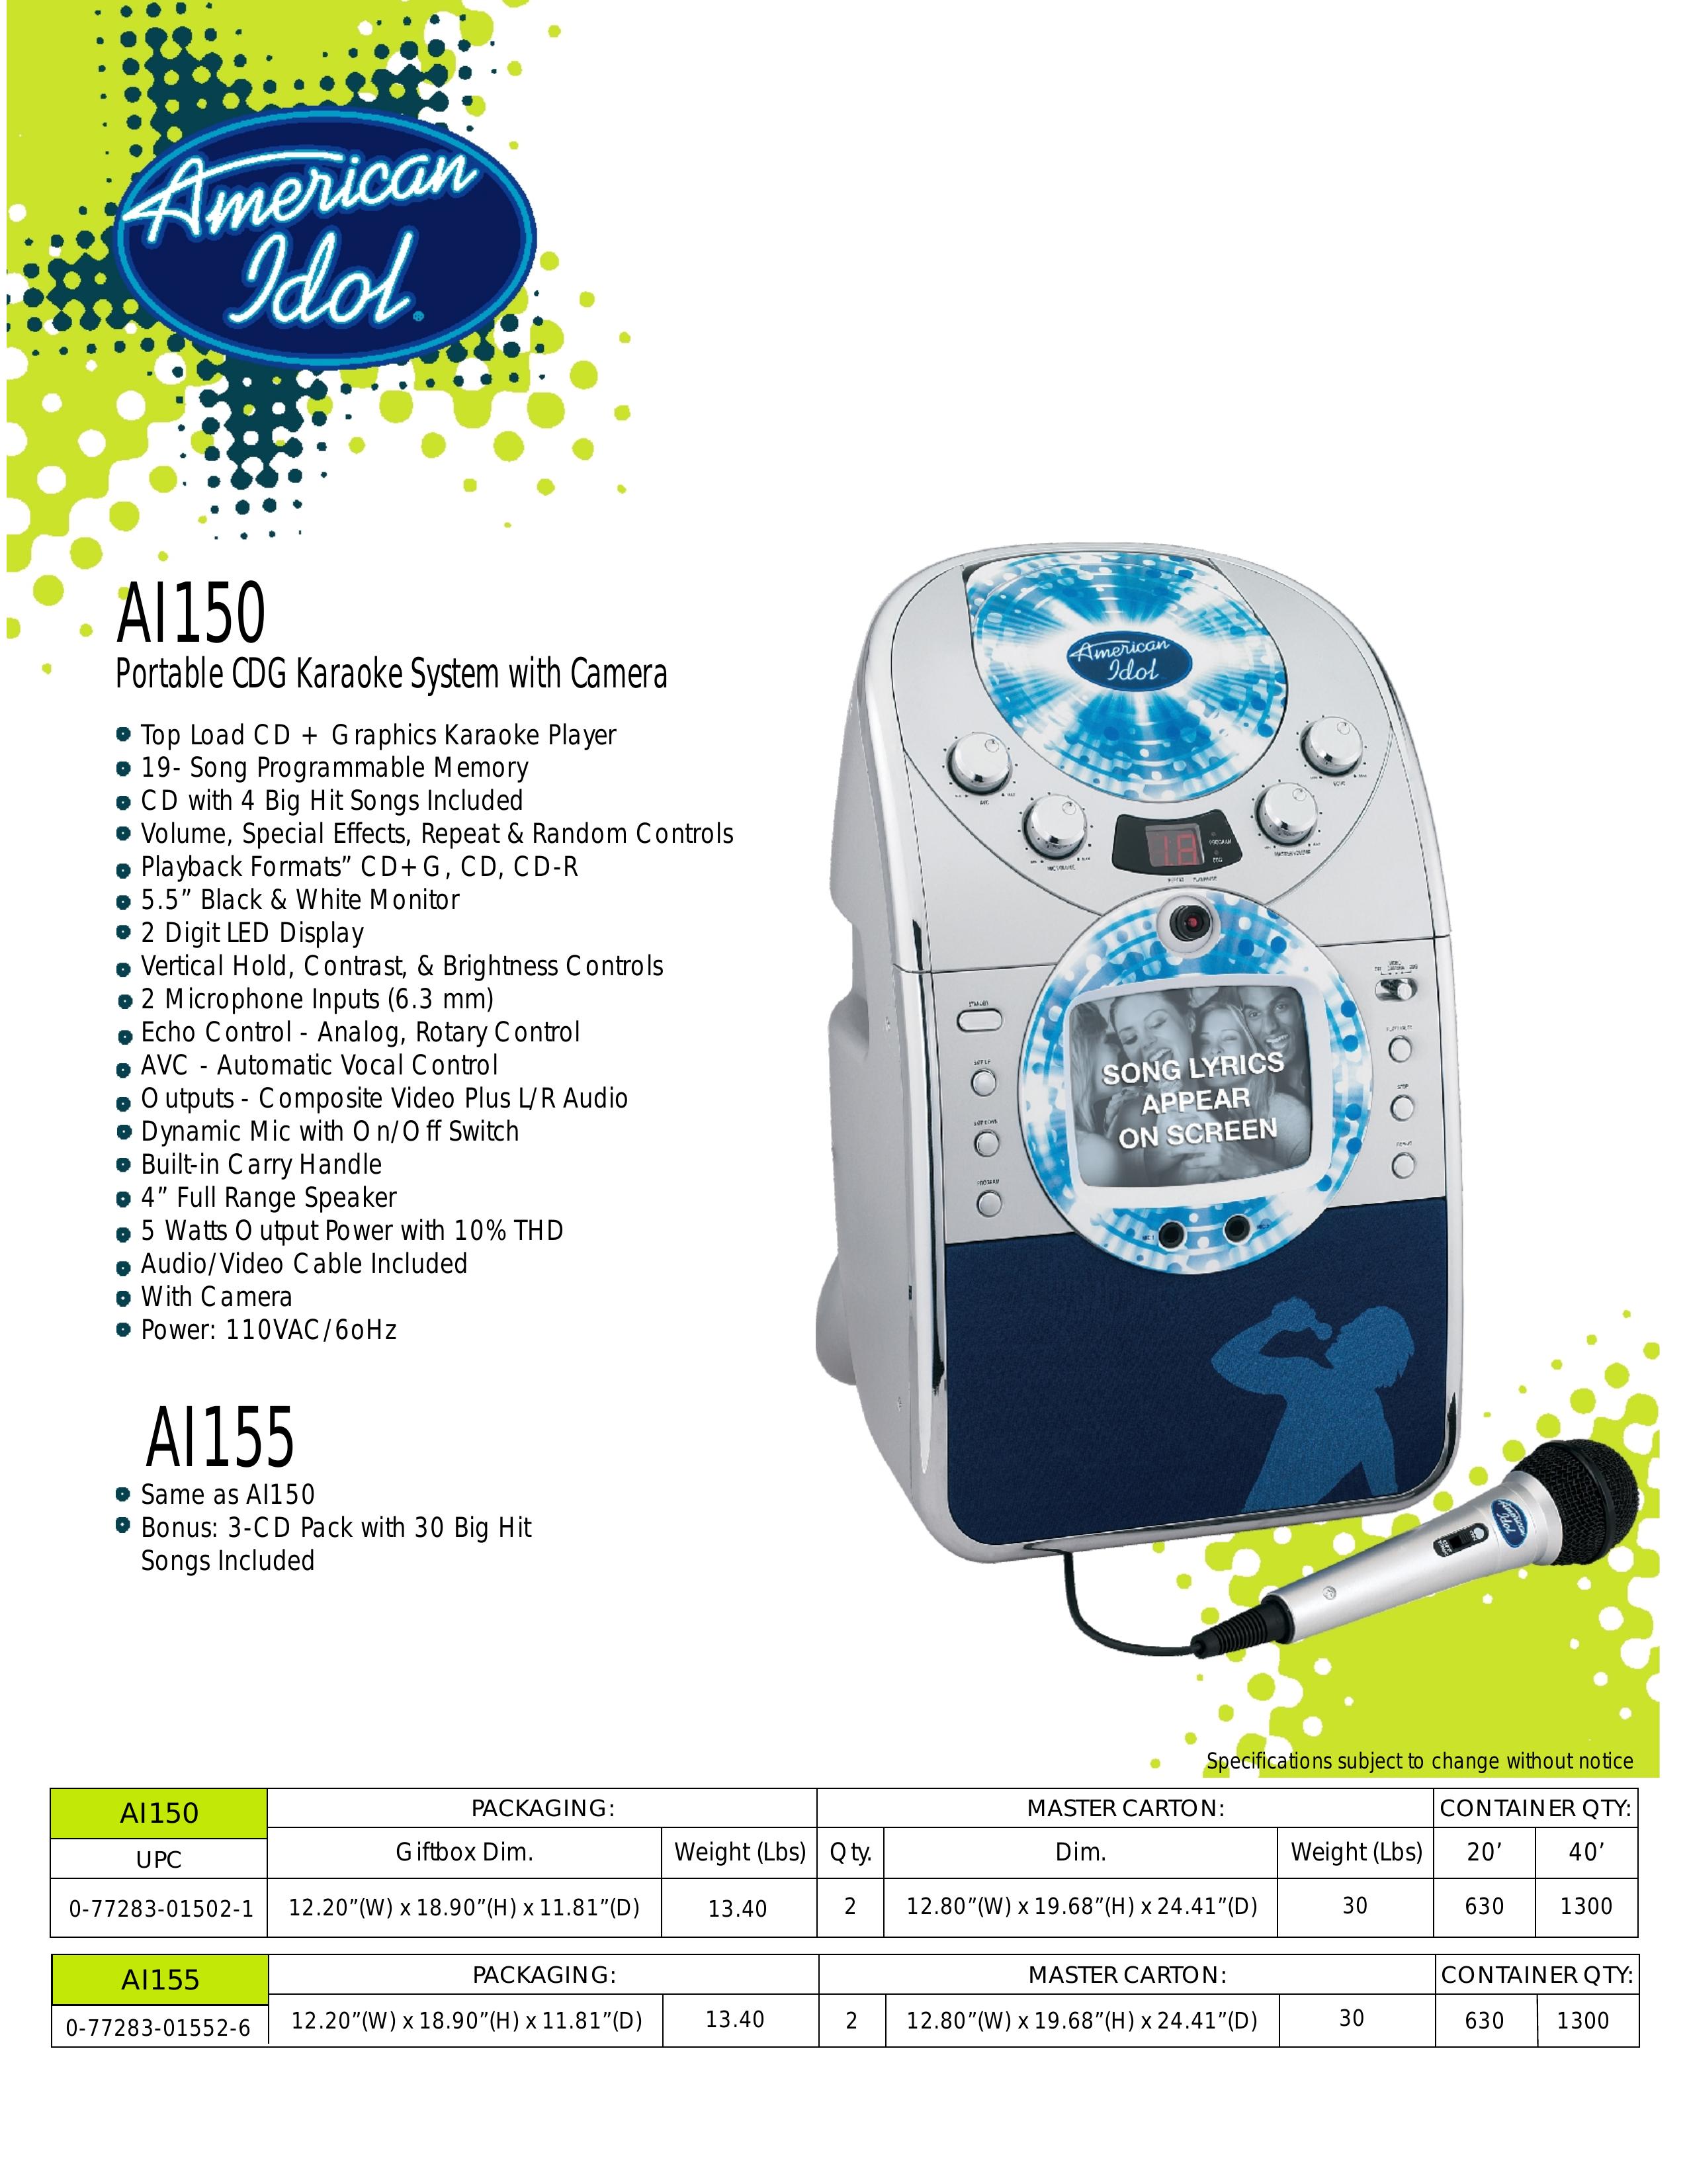 Spectra AI150 Karaoke Machine User Manual